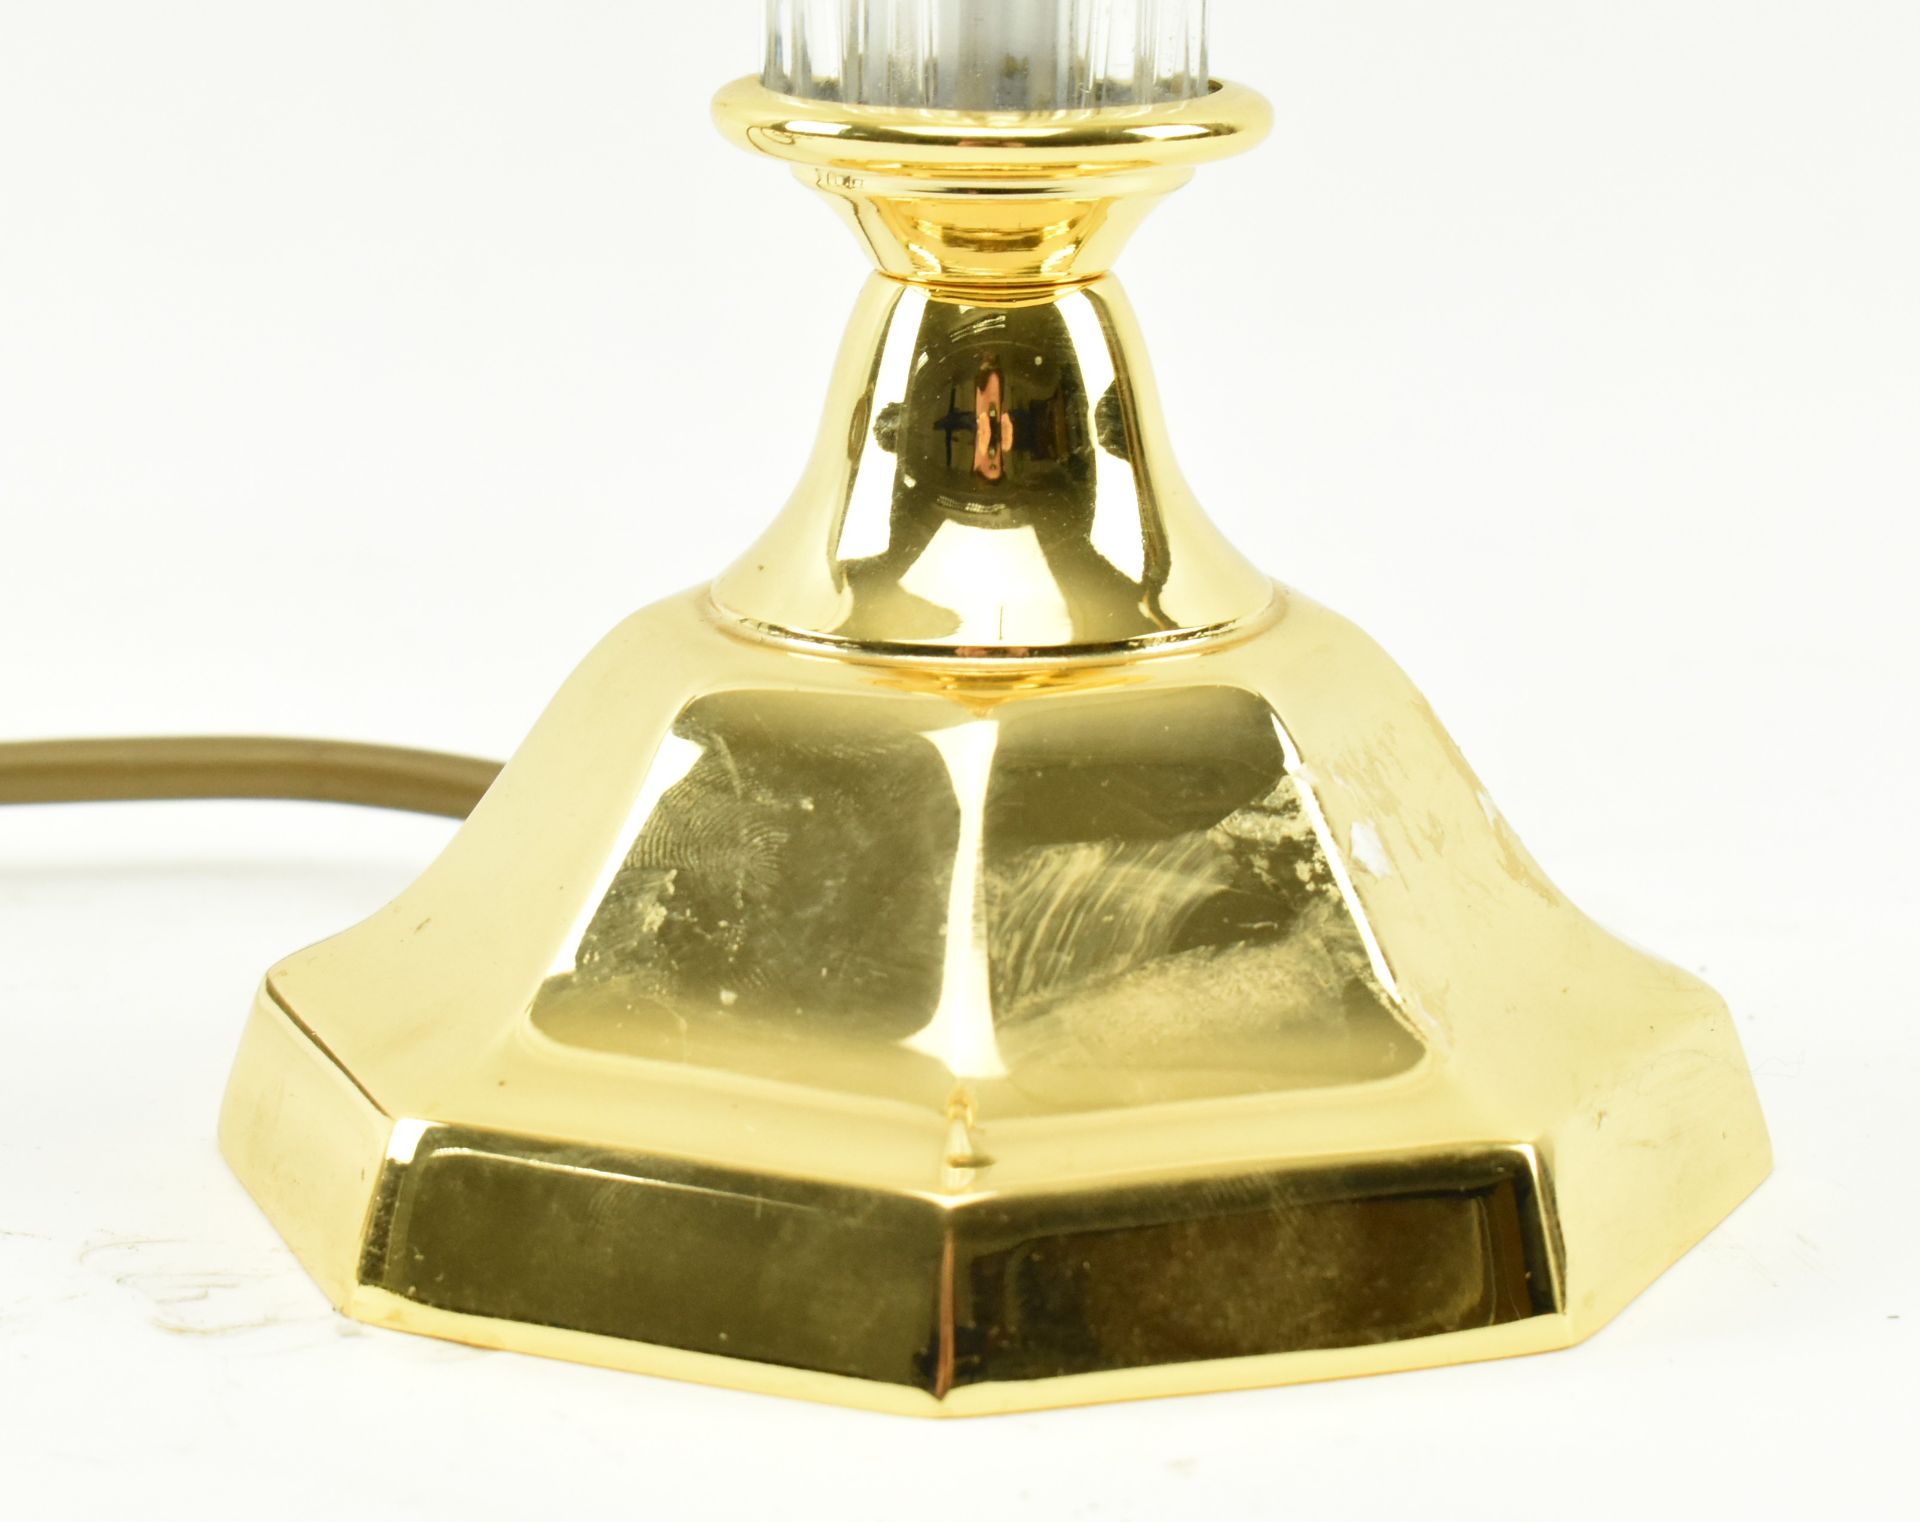 ART DECO STYLE GILT METAL & GLASS DESK TABLE LAMP - Image 4 of 5